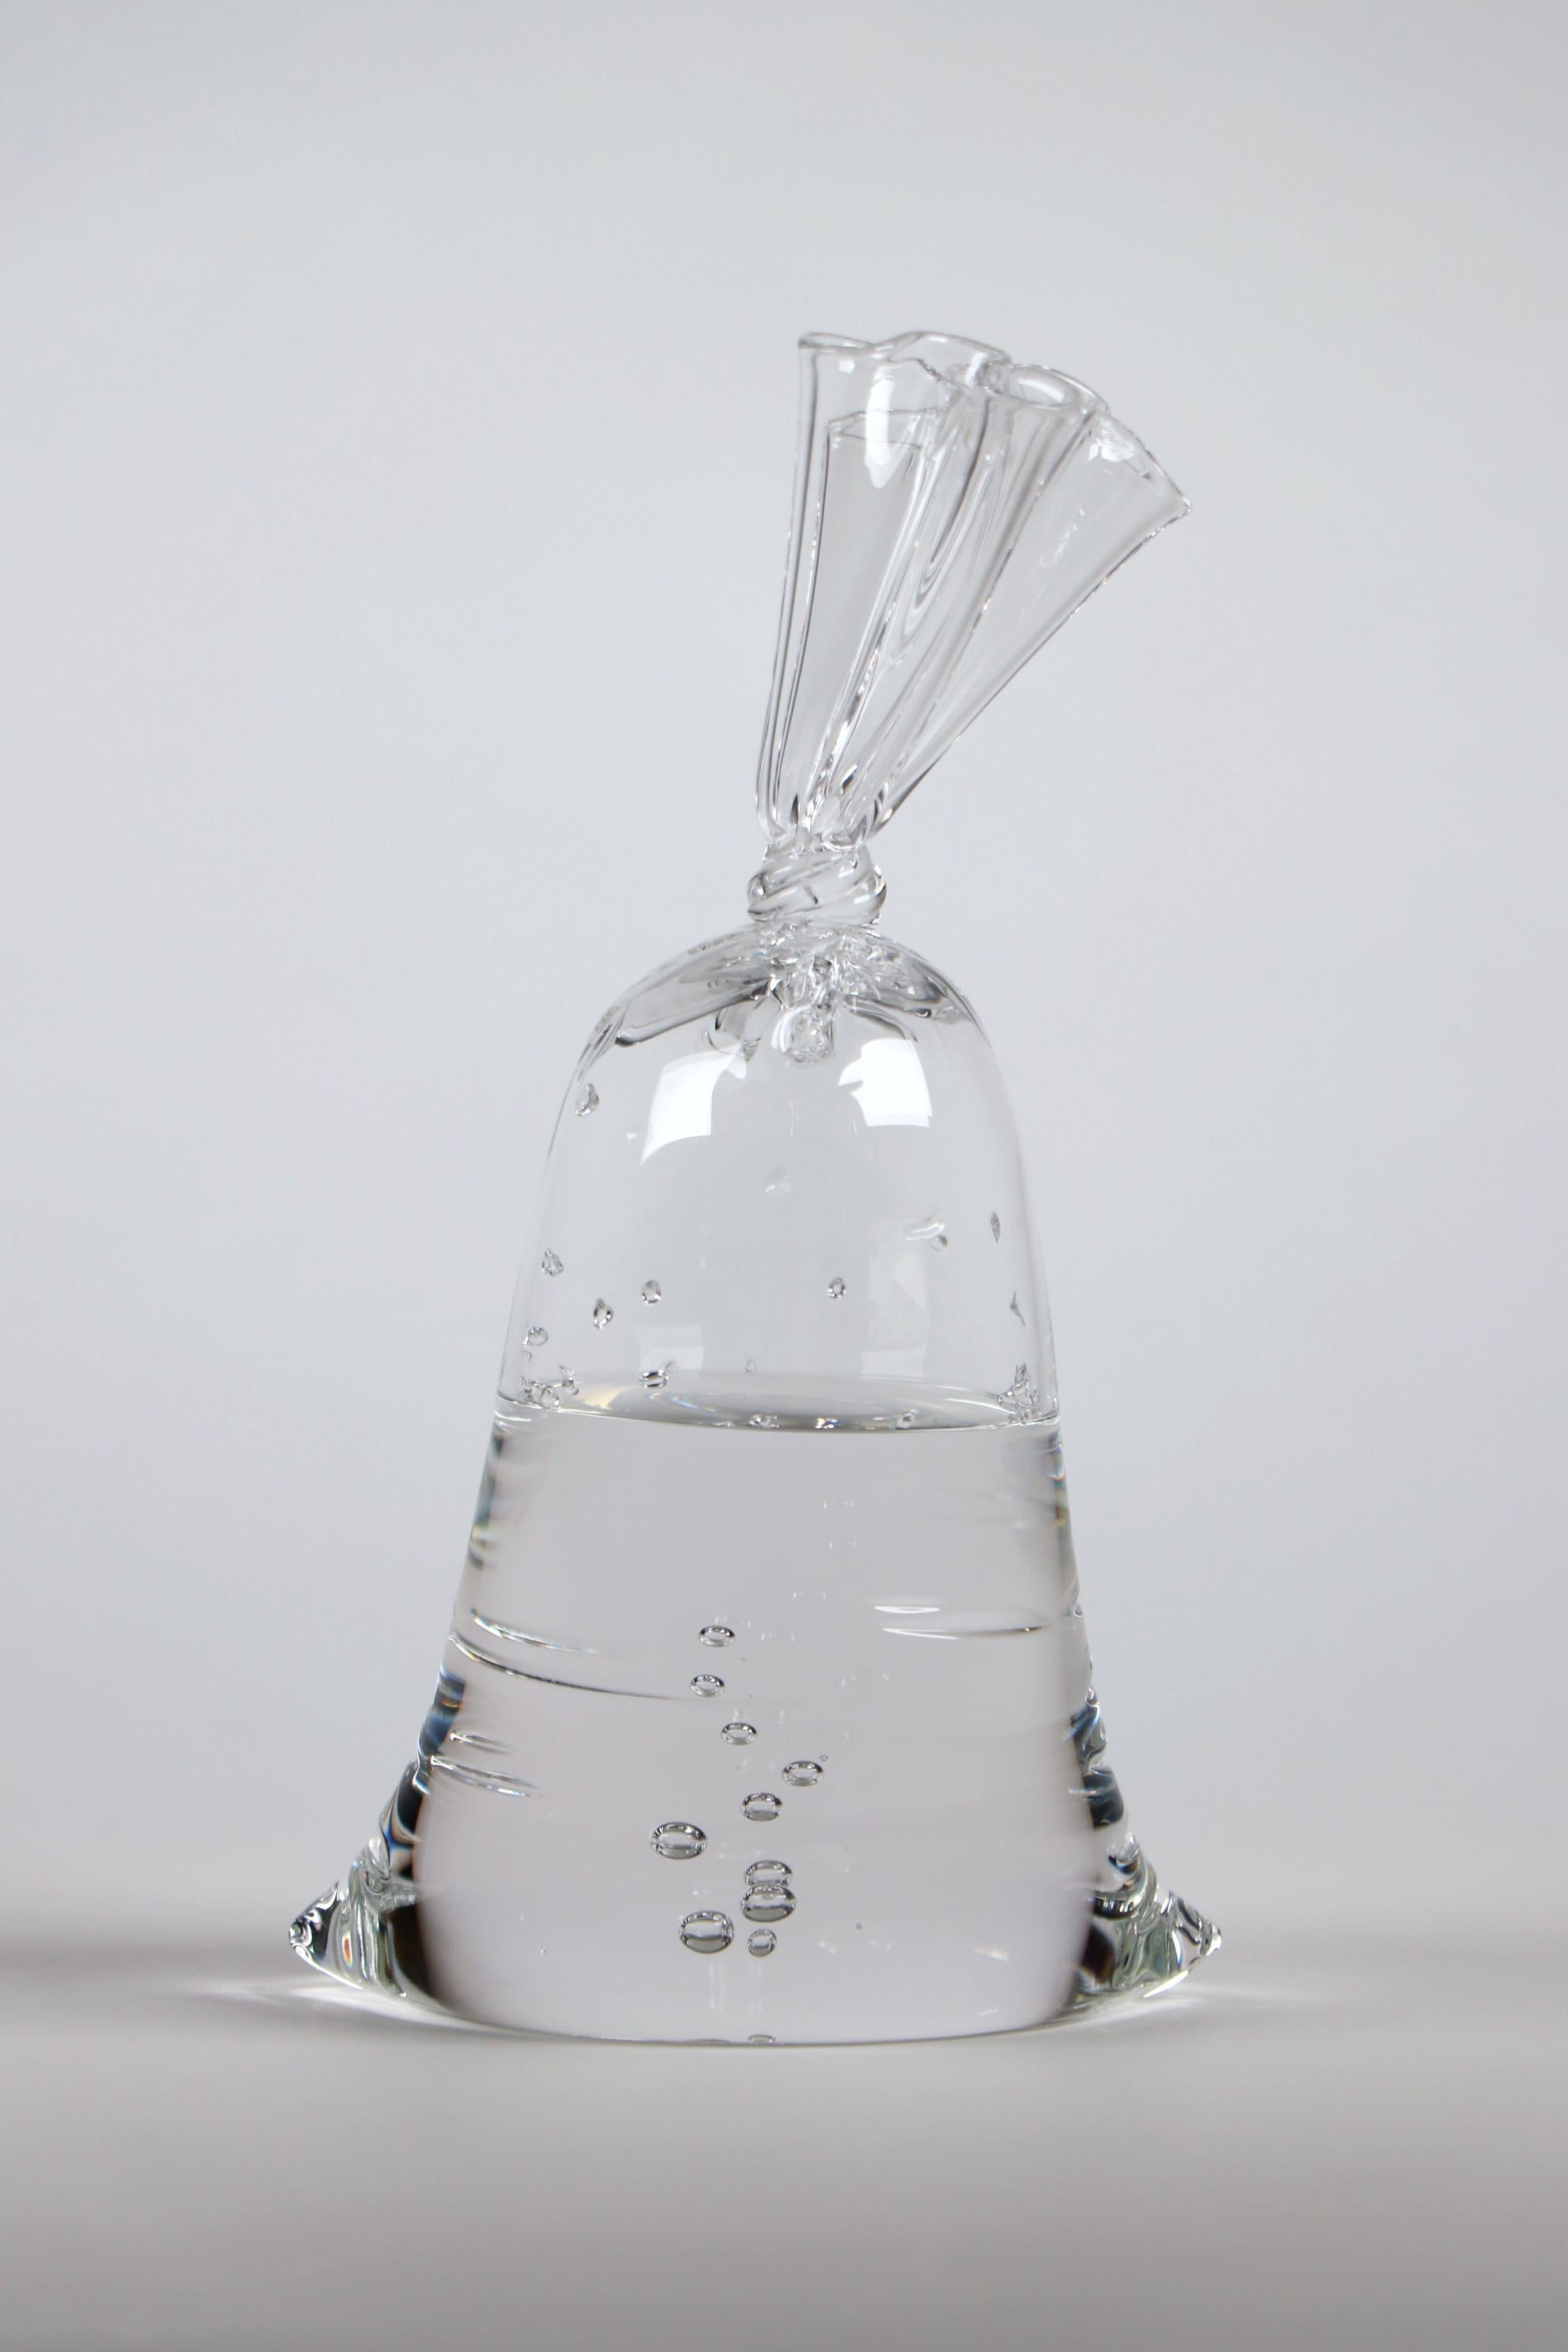 Mini Glass Water Bag - Hyperreal glass sculpture - Sculpture by Dylan Martinez